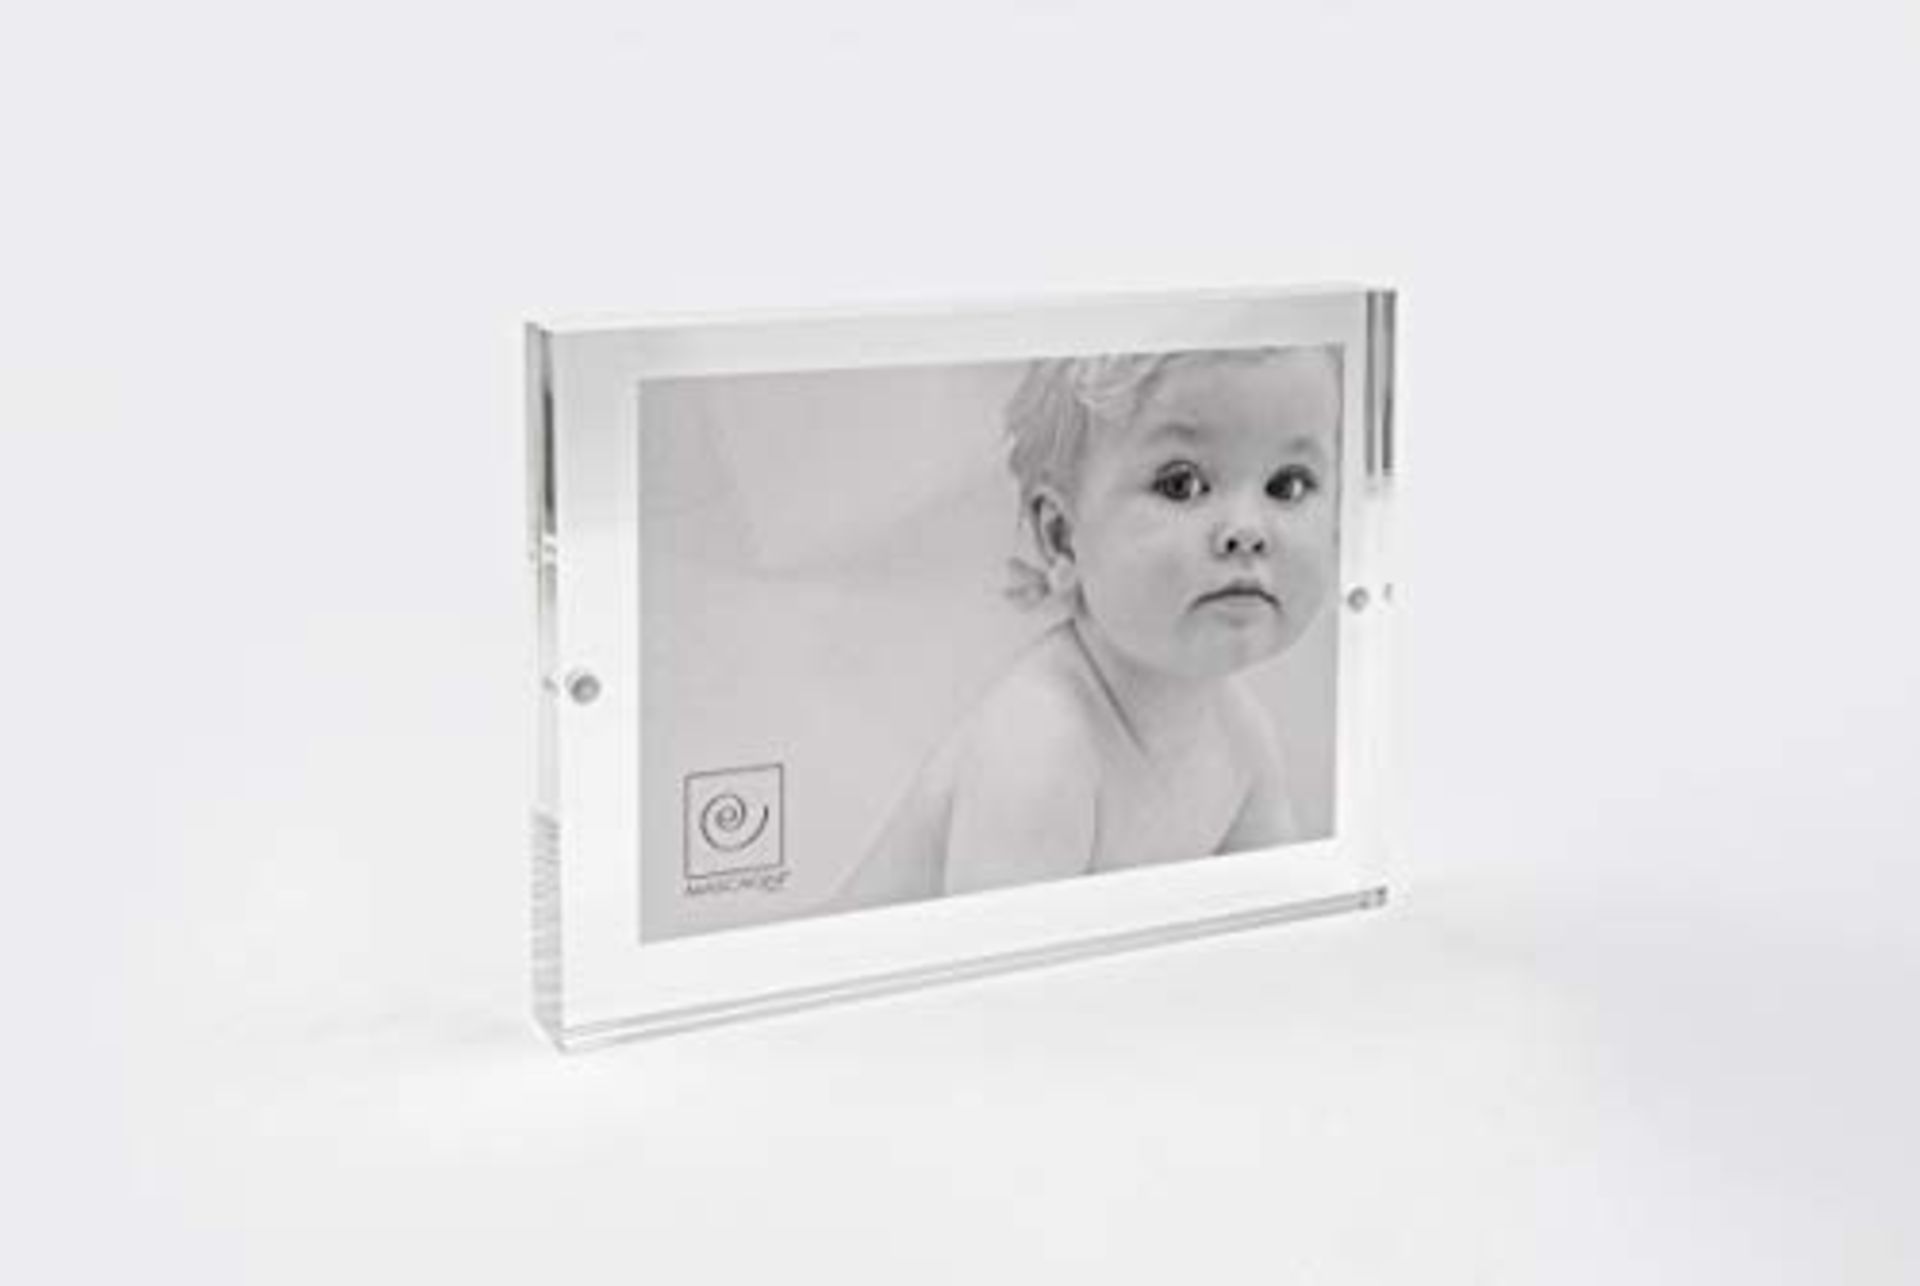 Mascagni M215 Transparent Floor Display Backlit - Frame, Acrylic, Transparent, Floo